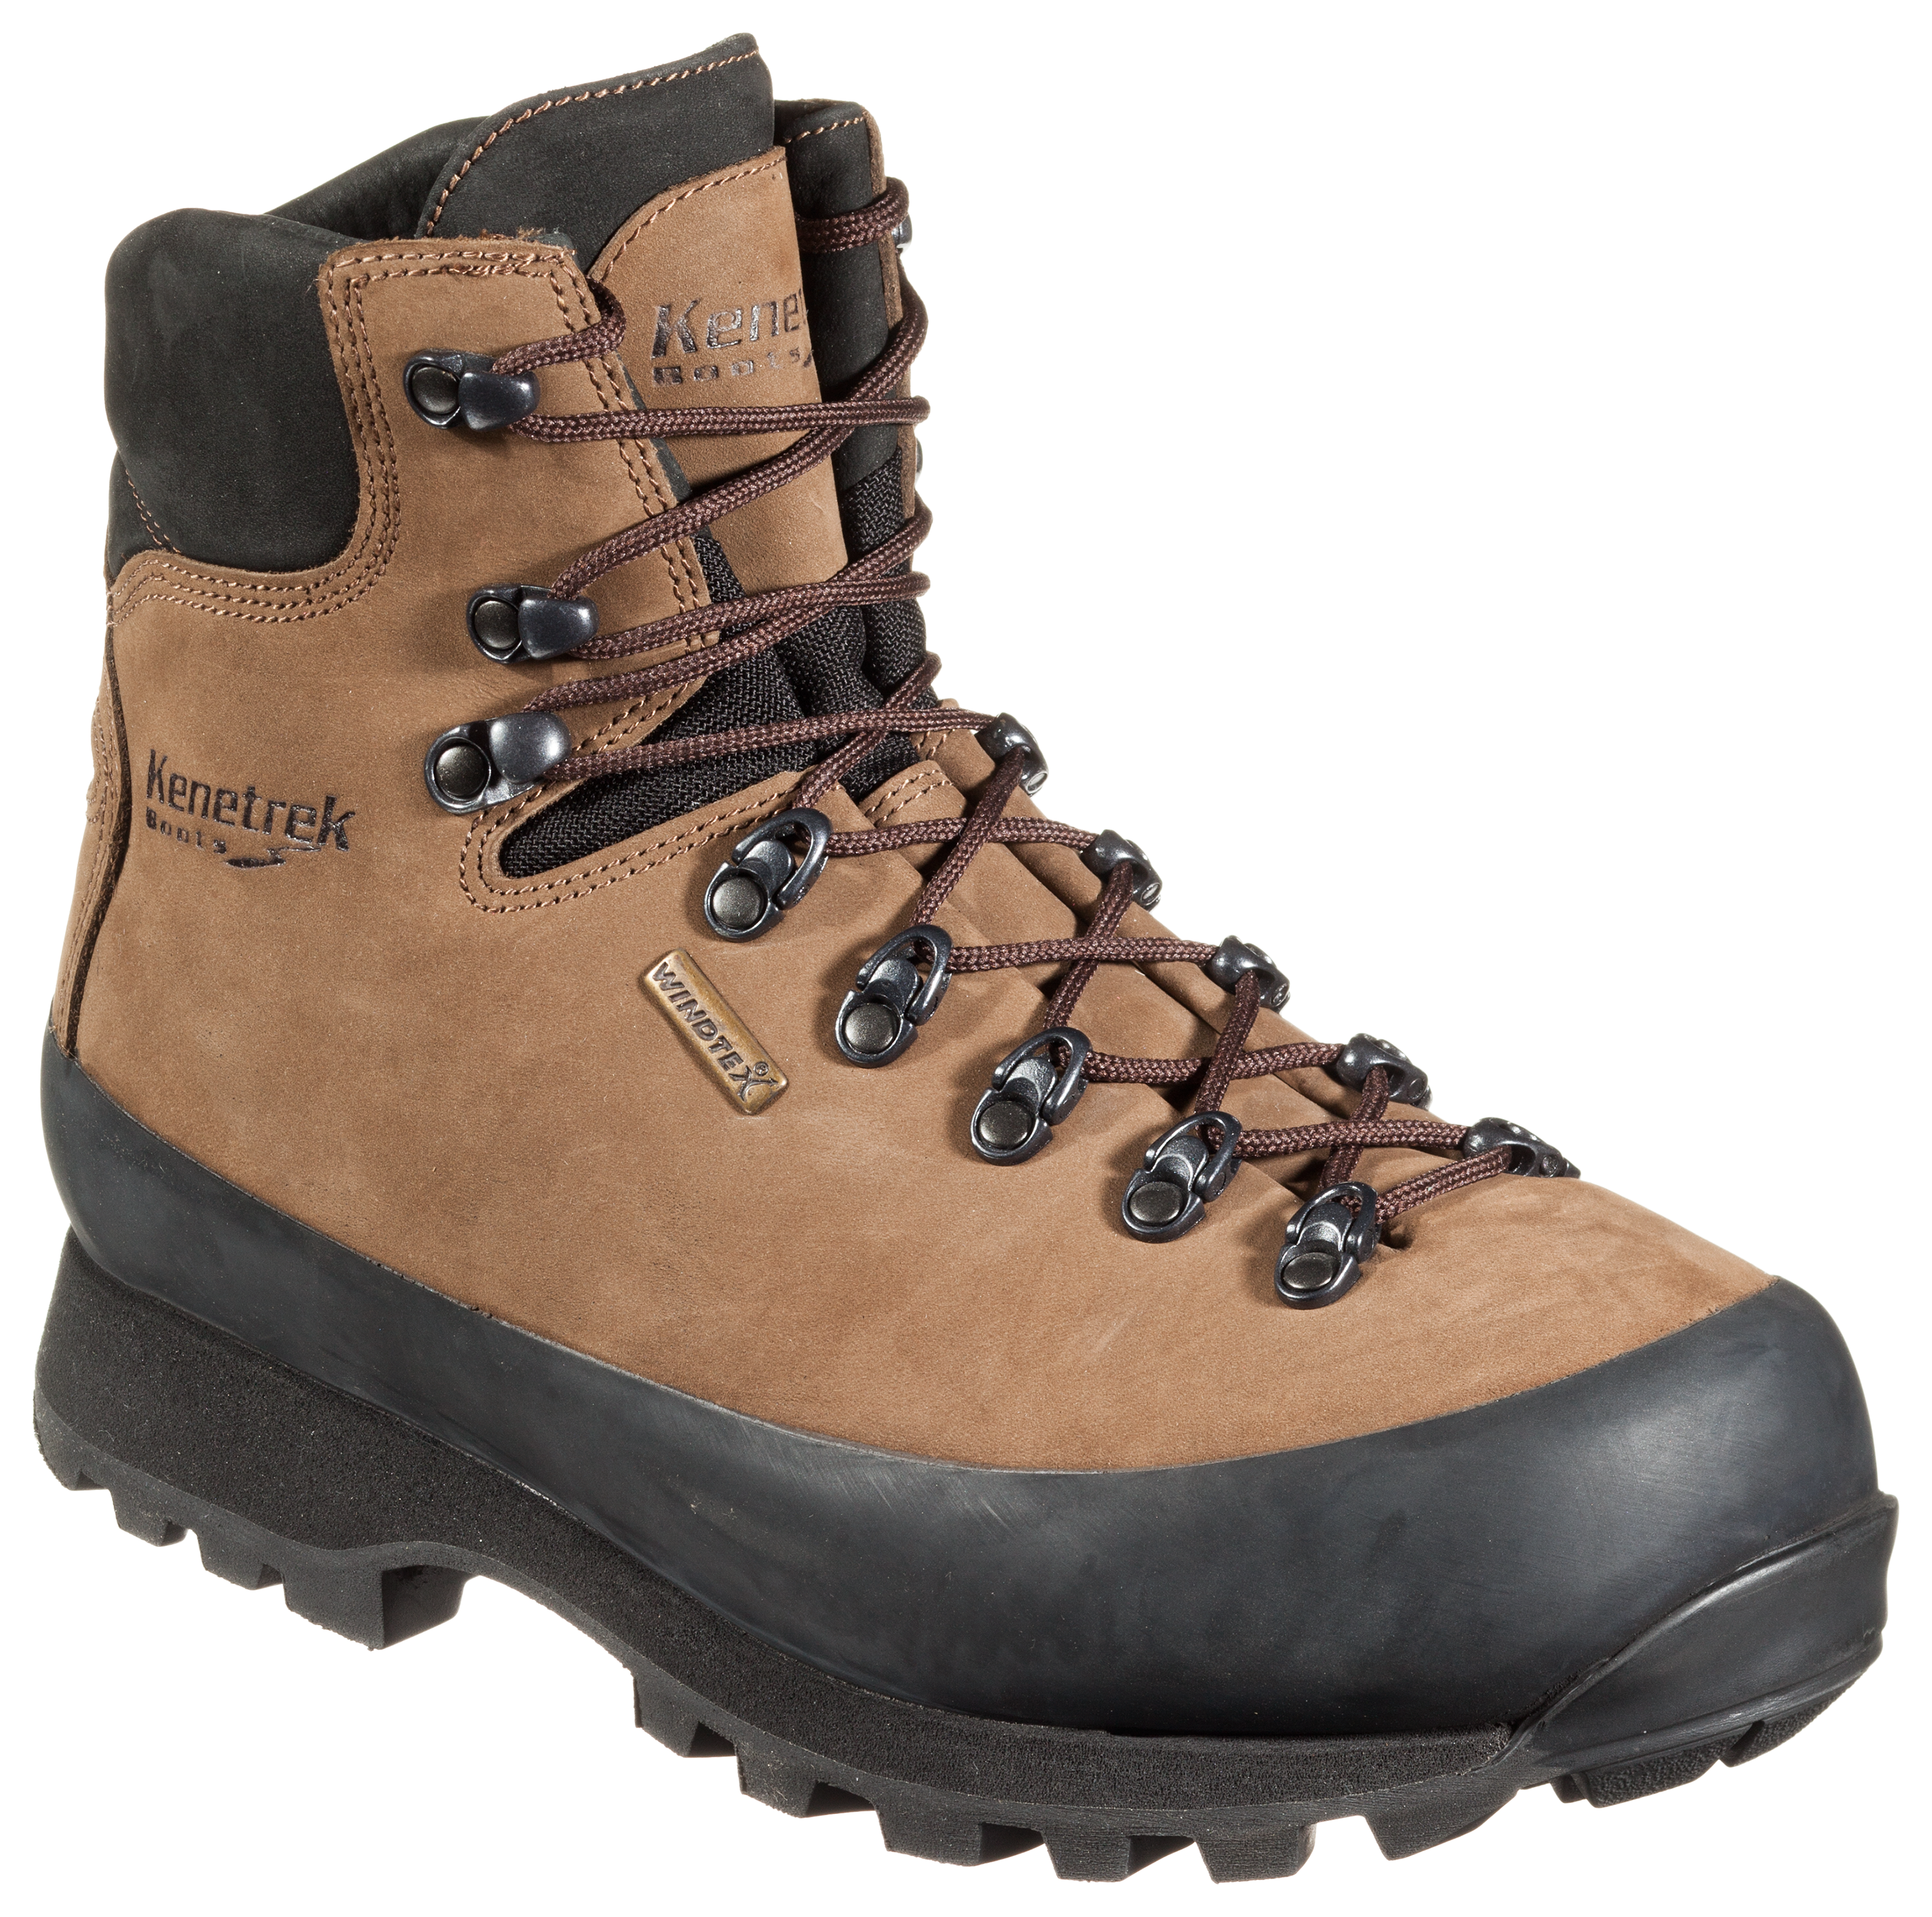 Kenetrek Hardscrabble Waterproof Hiking Boots for Men - Brown - 9.5M